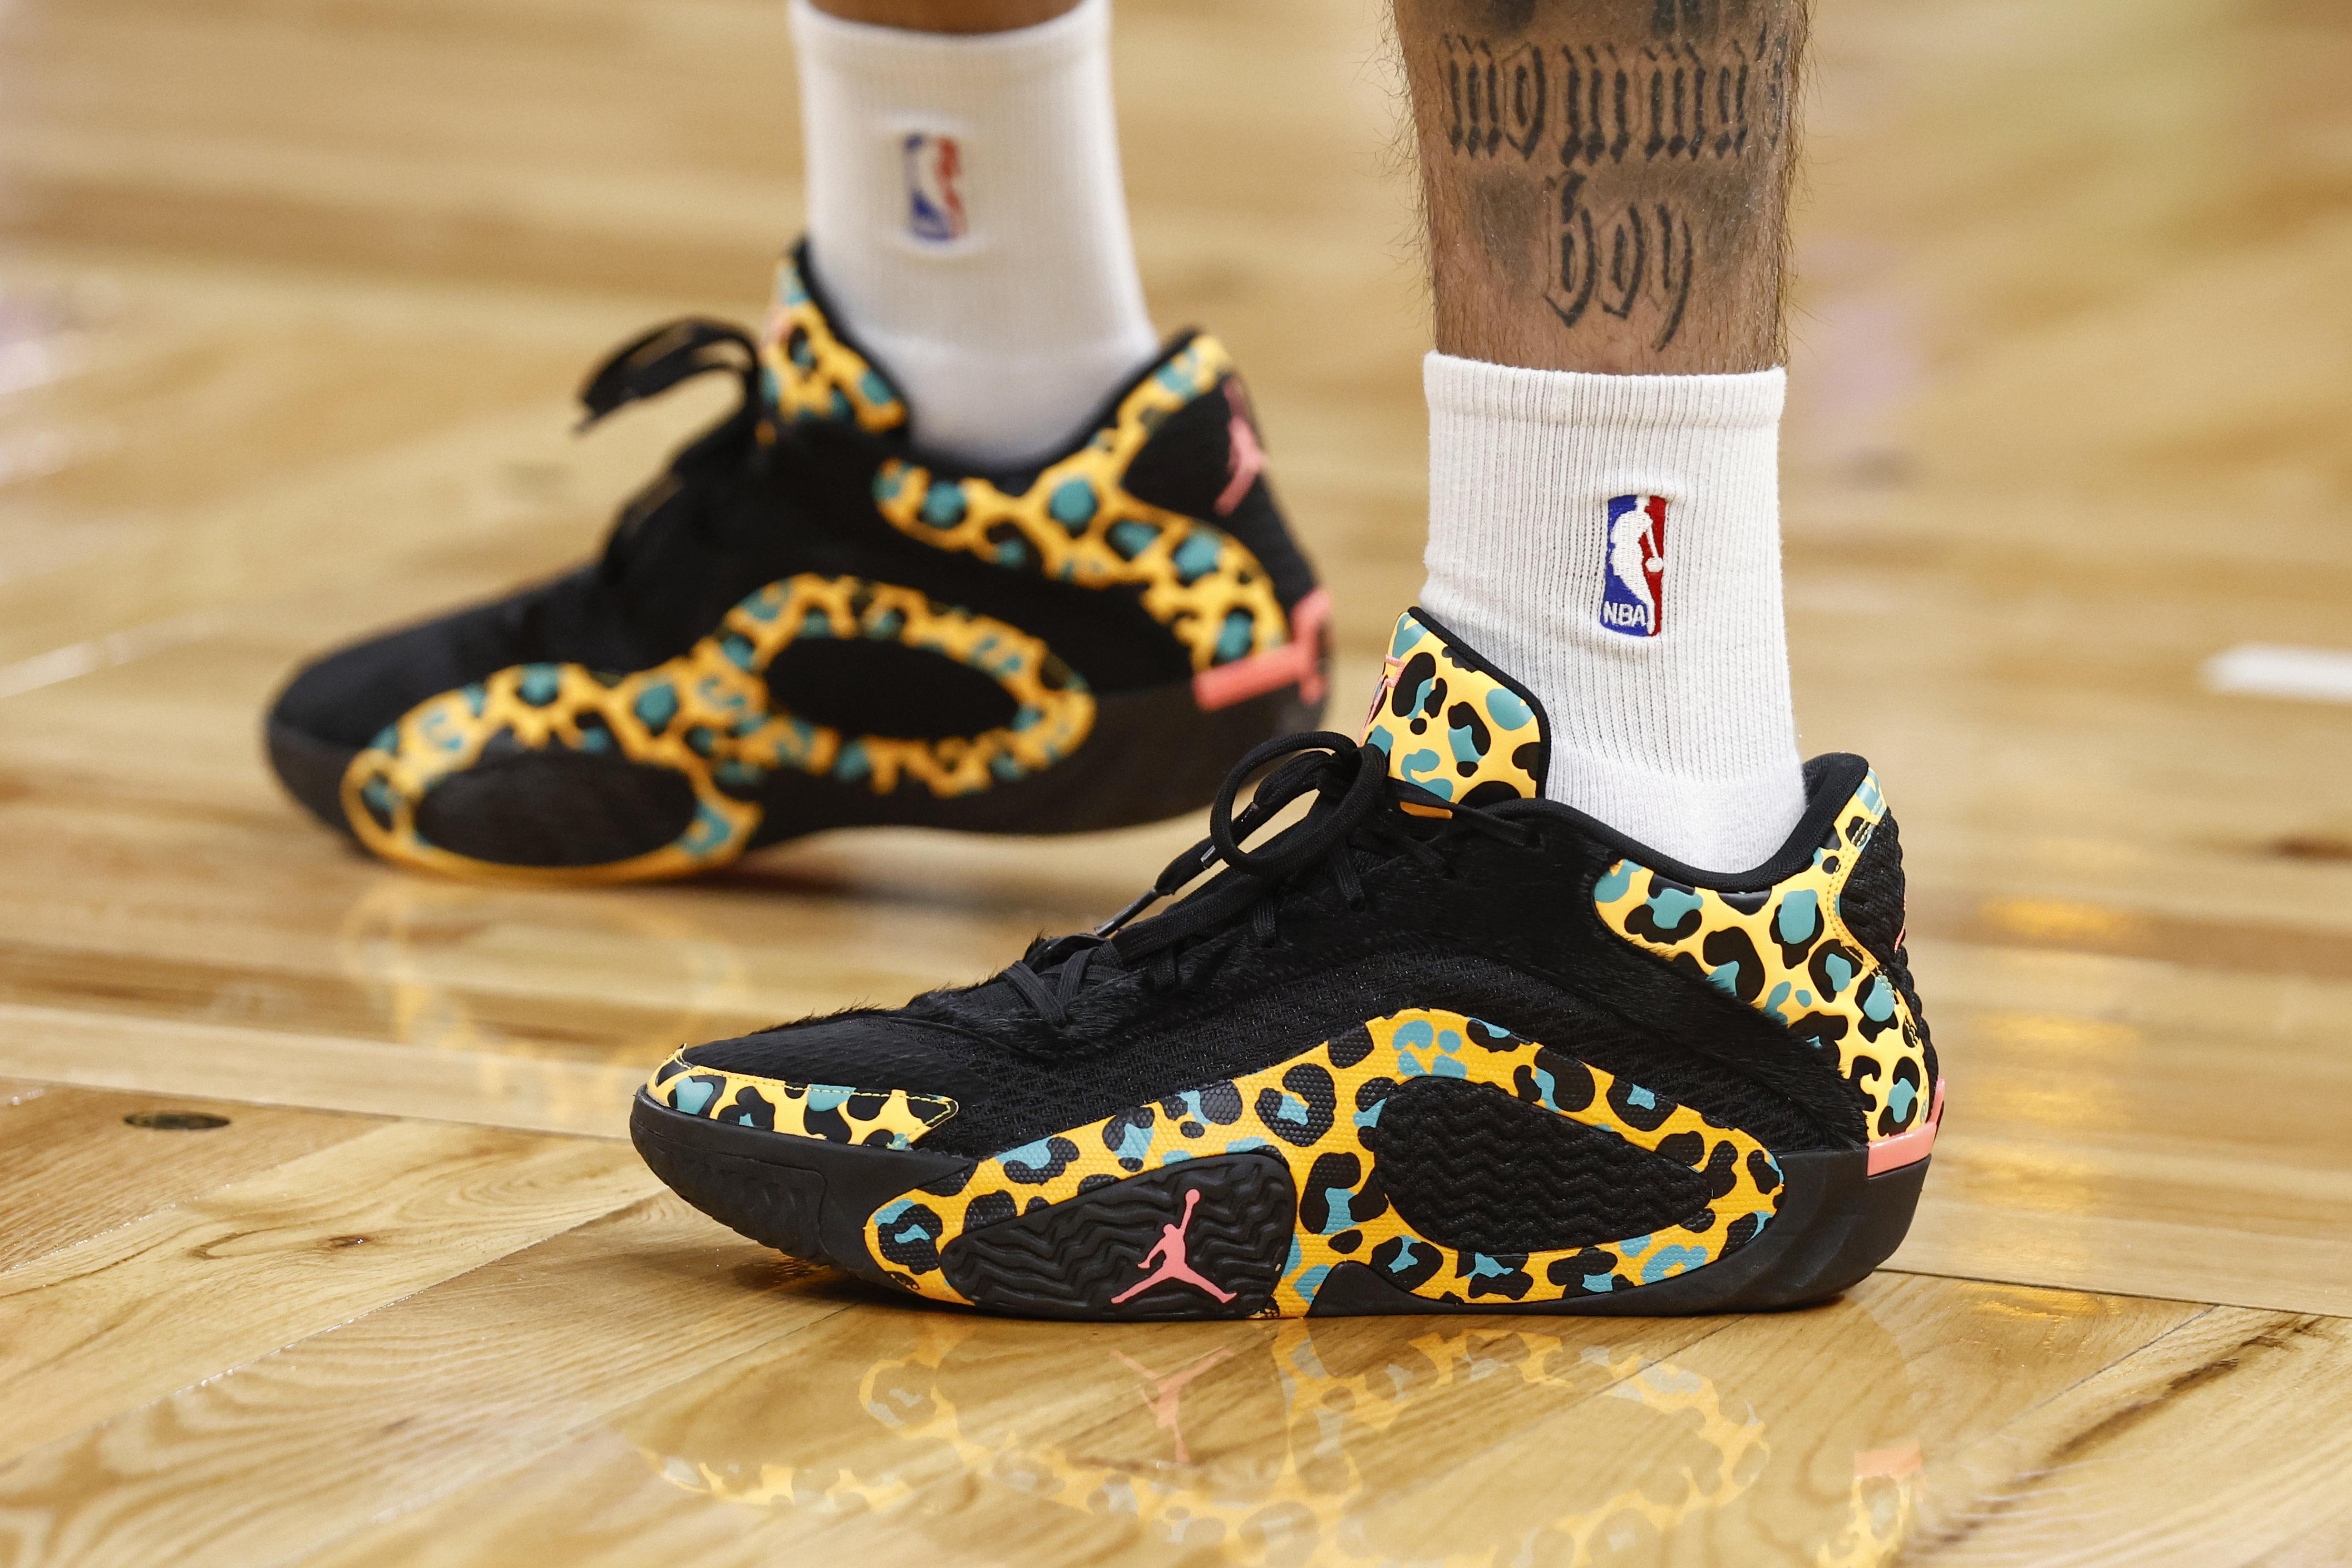 Boston Celtics forward Jayson Tatum's animal print Jordan Brand sneakers.